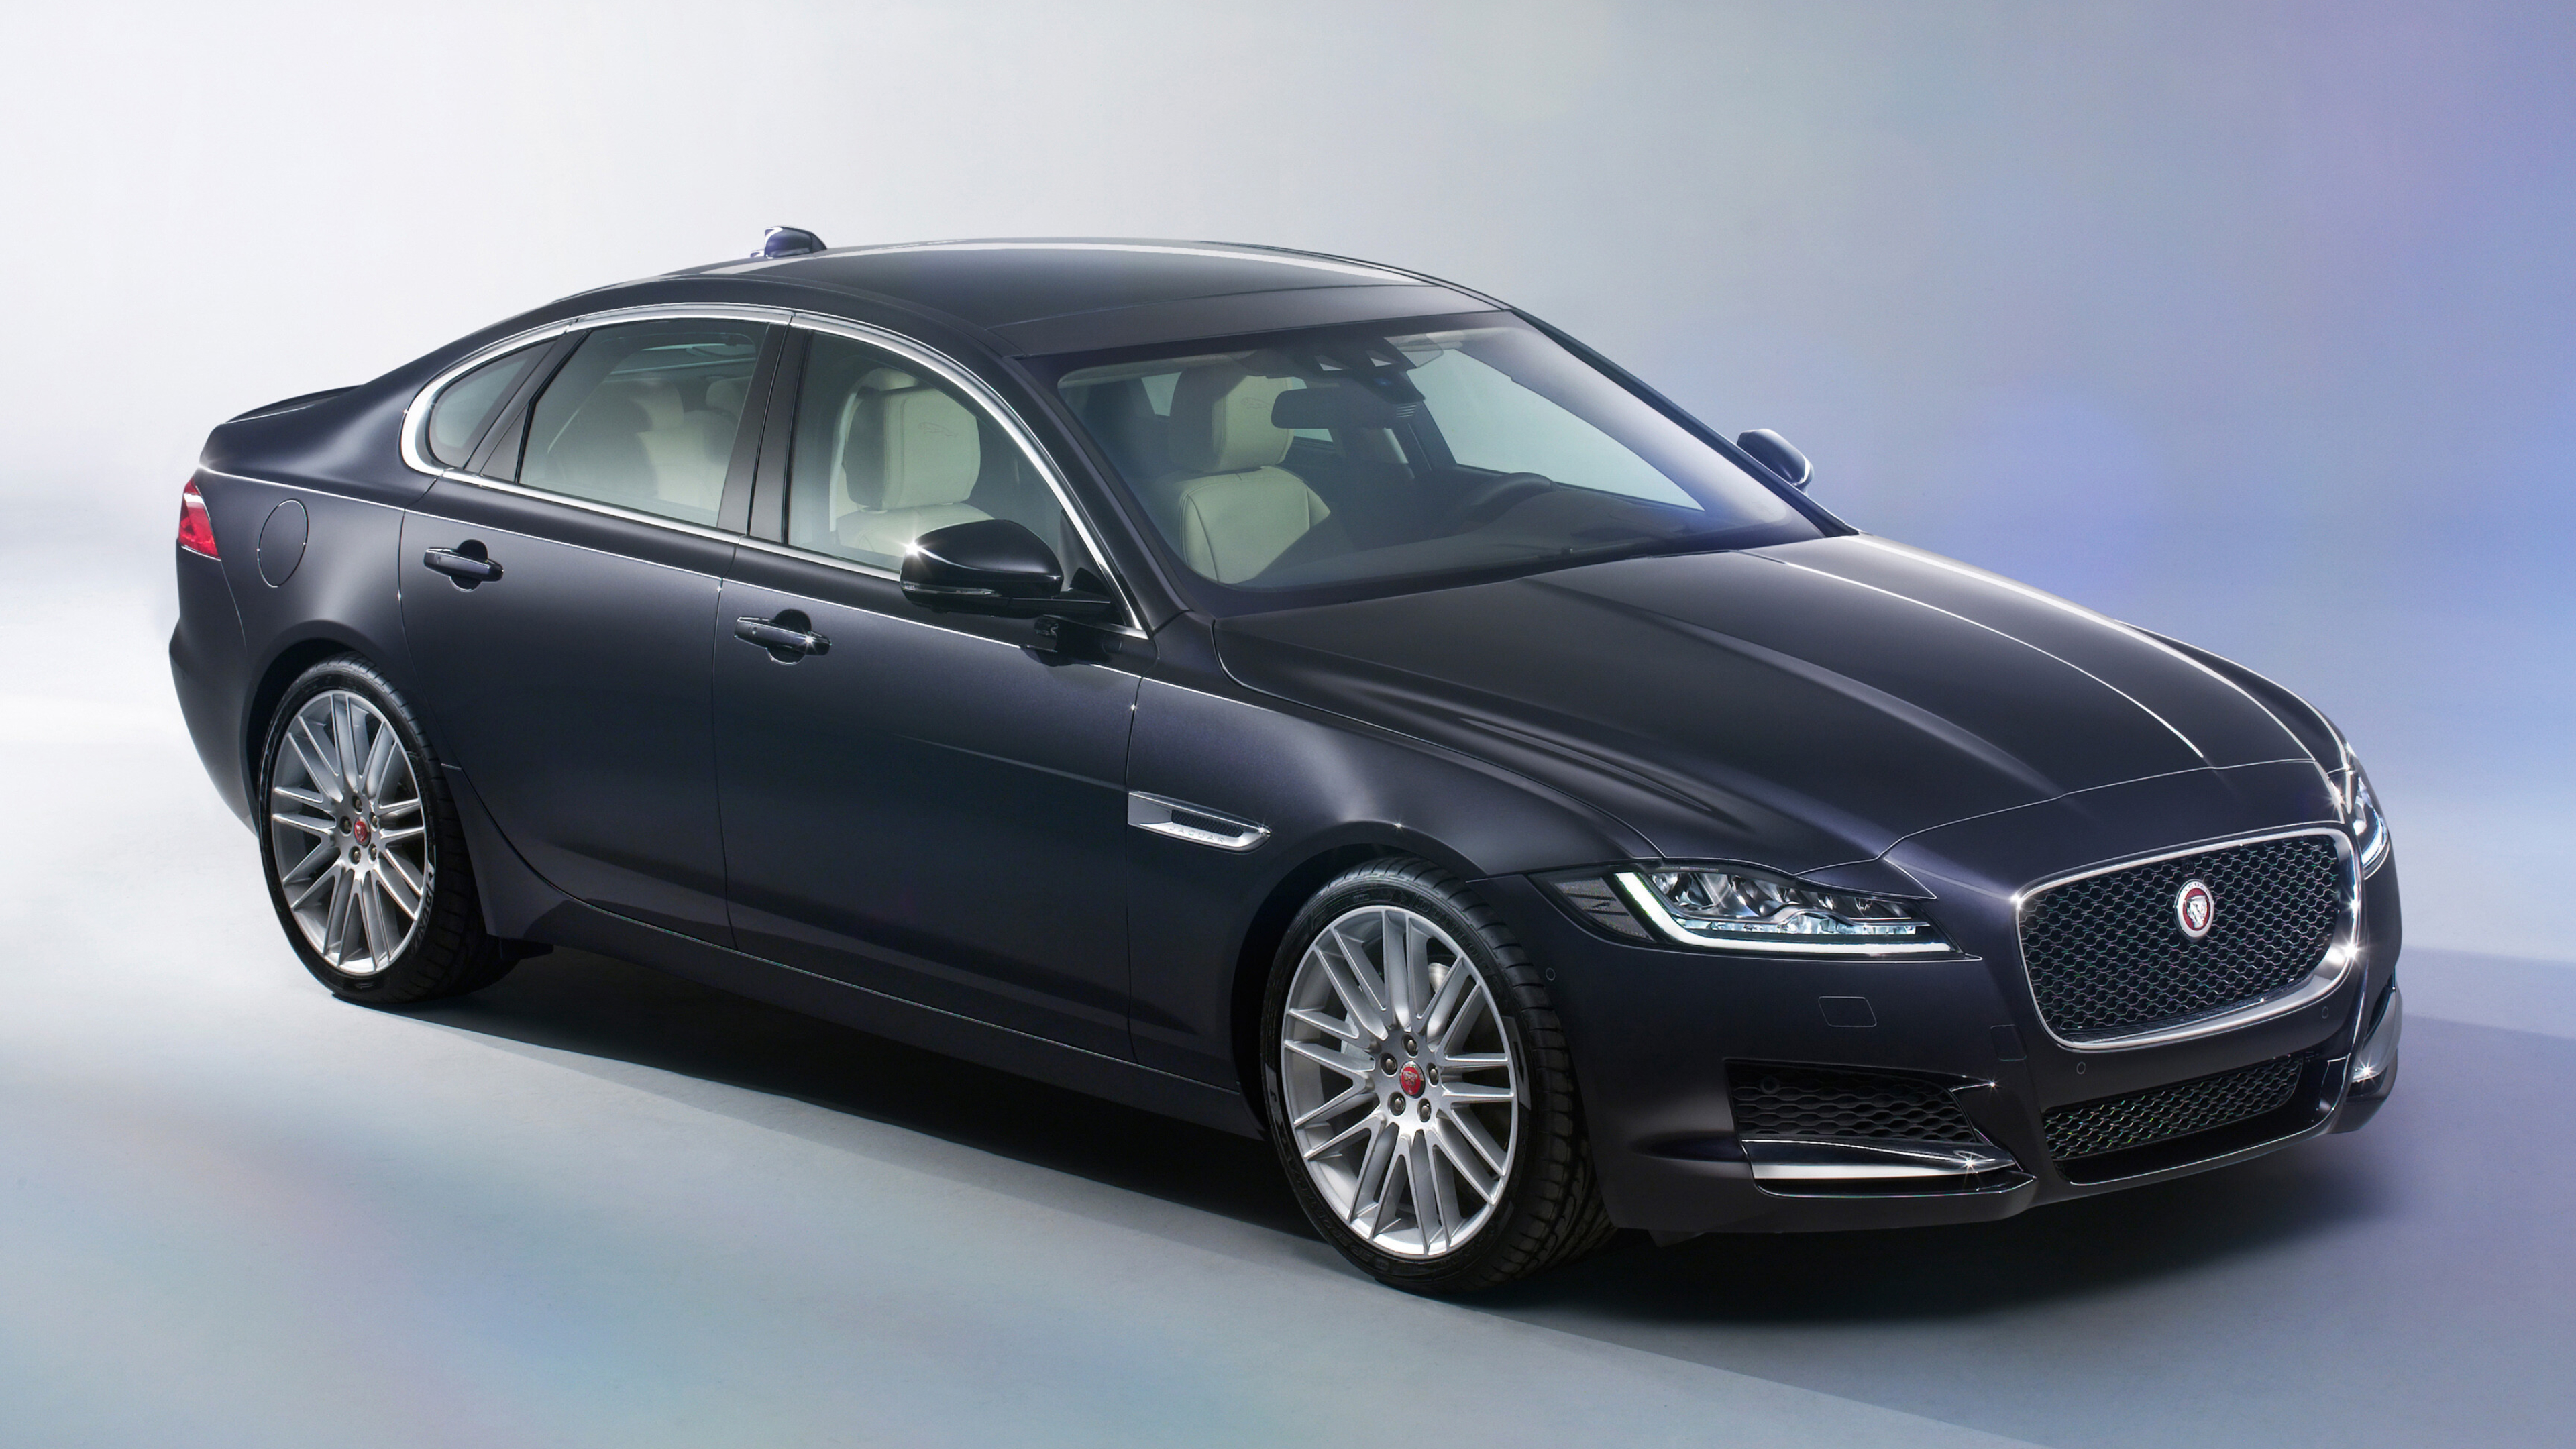 Jaguar Cars: A British multinational car manufacturer, JLR, XF. 3840x2160 4K Background.